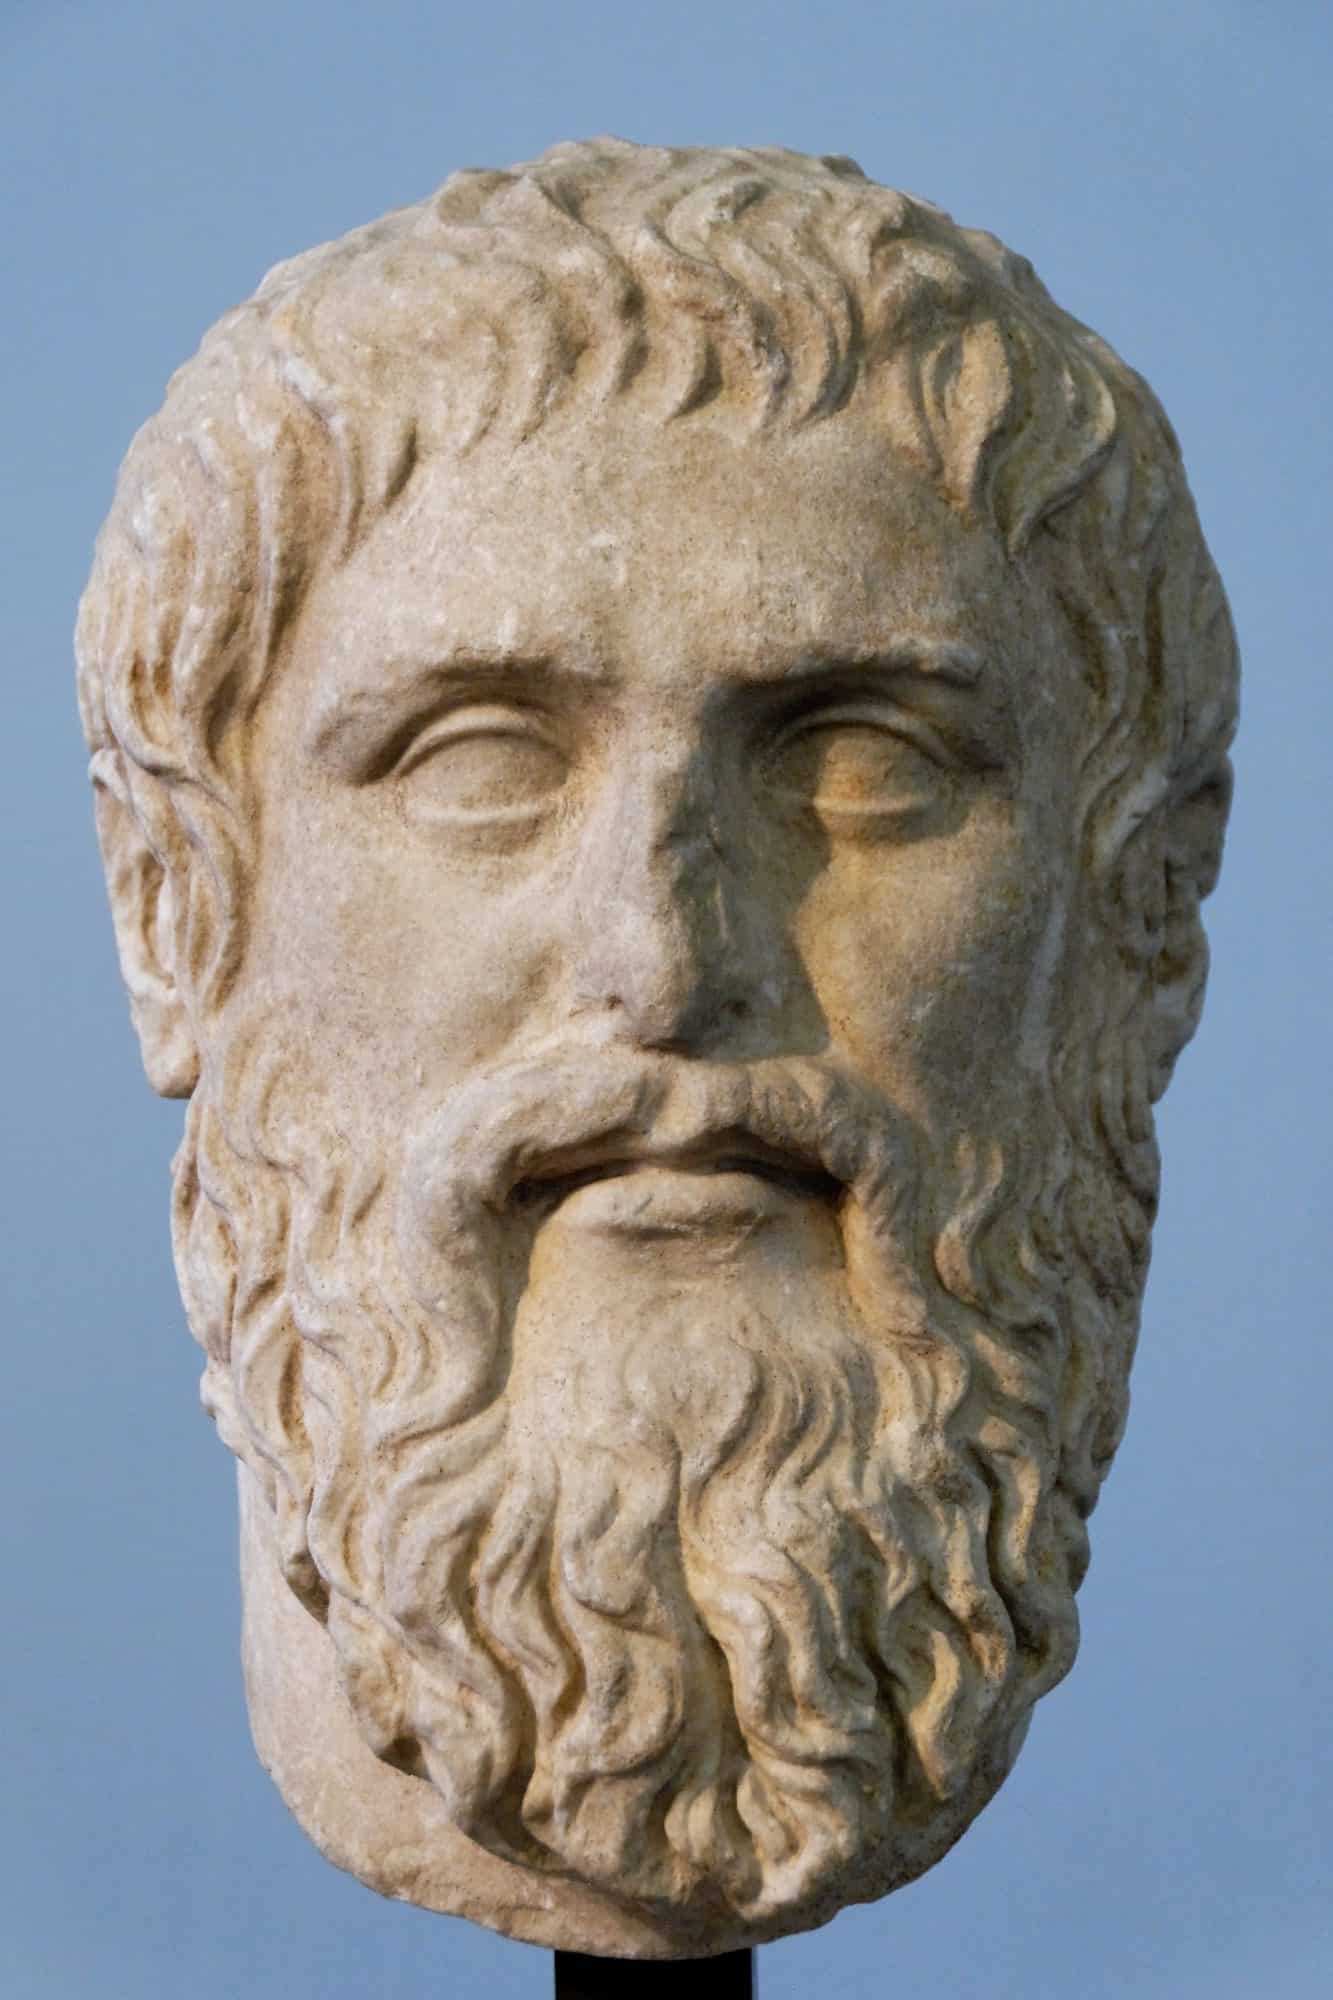 head of a classical greek sculpture of Plato